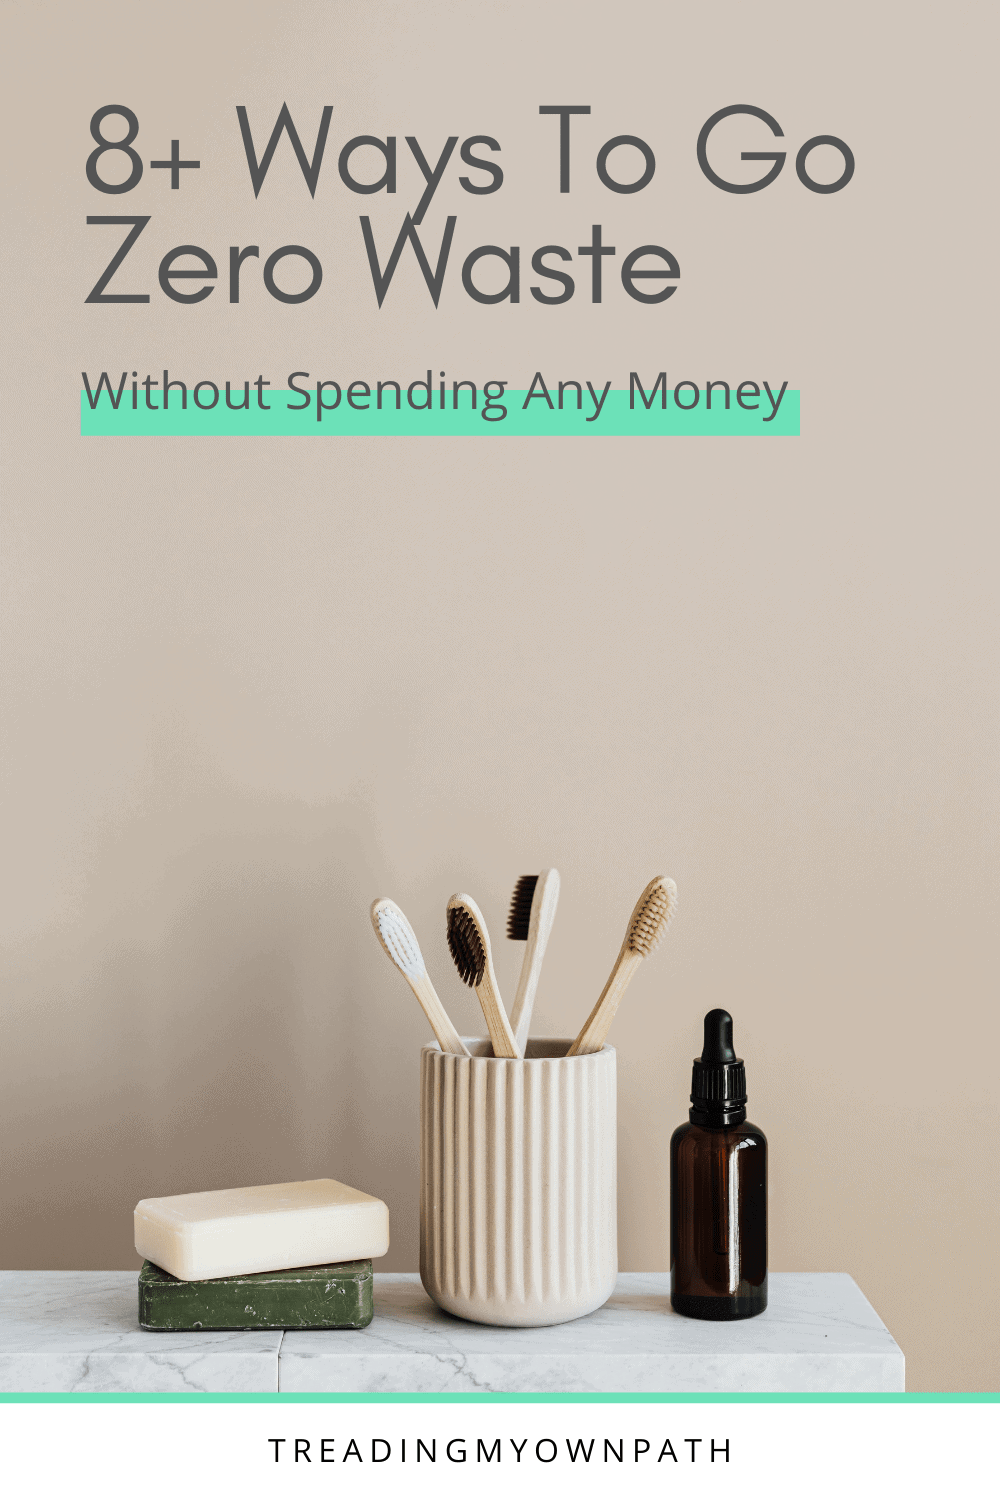 8+ Ways to Go Zero Waste Without Spending Any Money